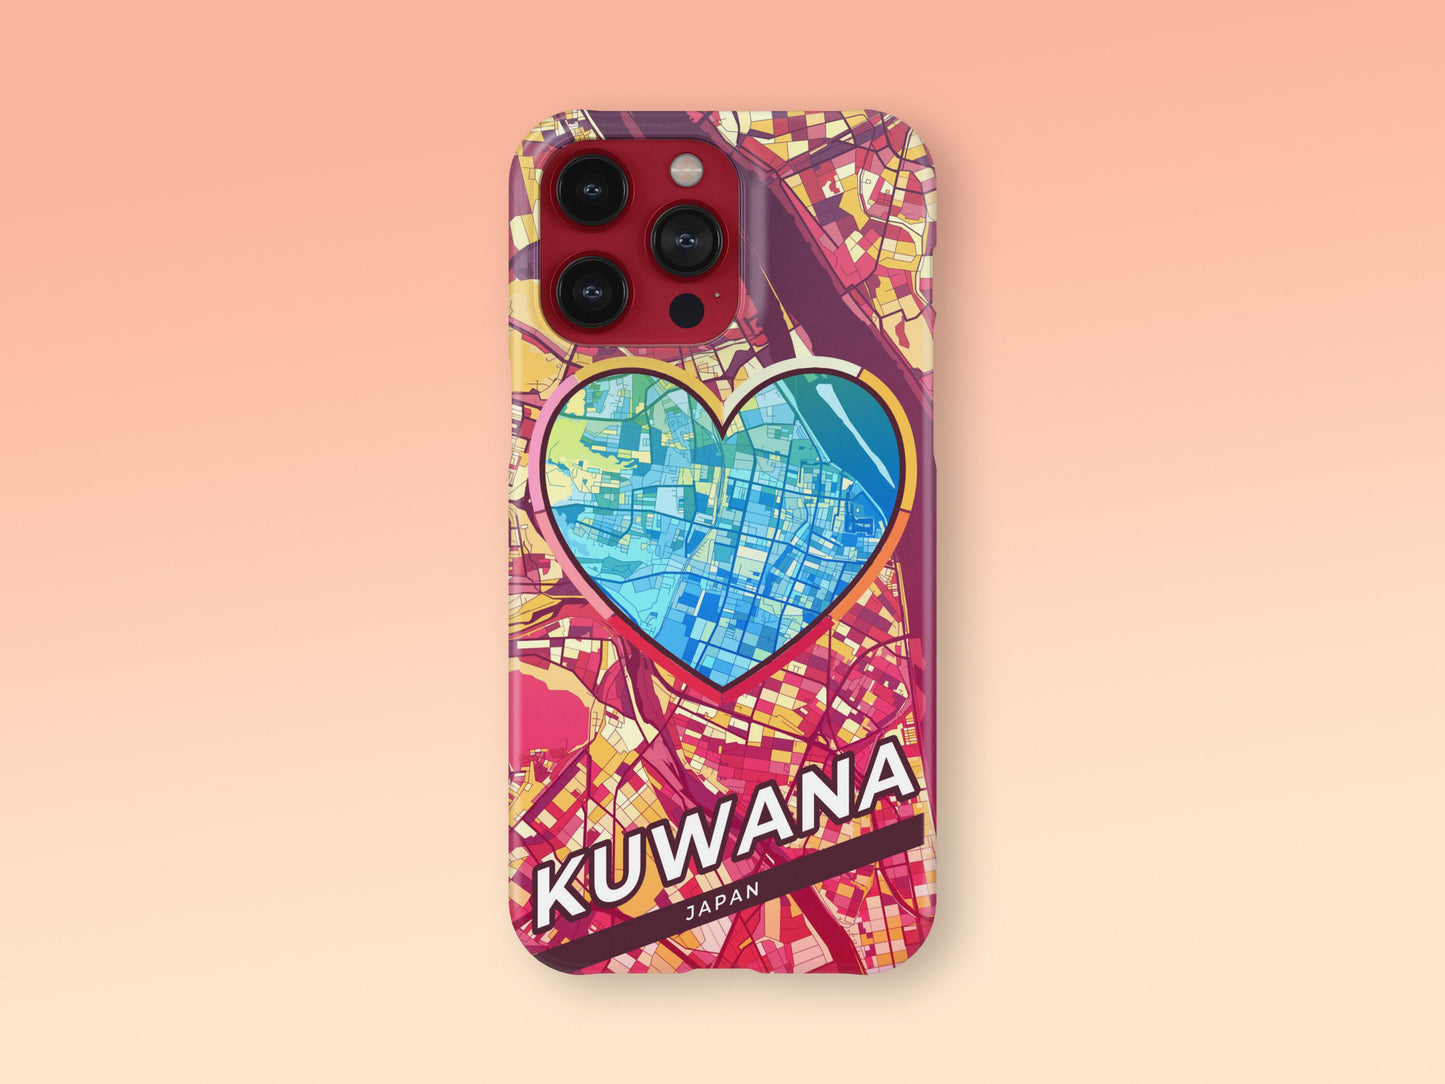 Kuwana Japan slim phone case with colorful icon. Birthday, wedding or housewarming gift. Couple match cases. 2